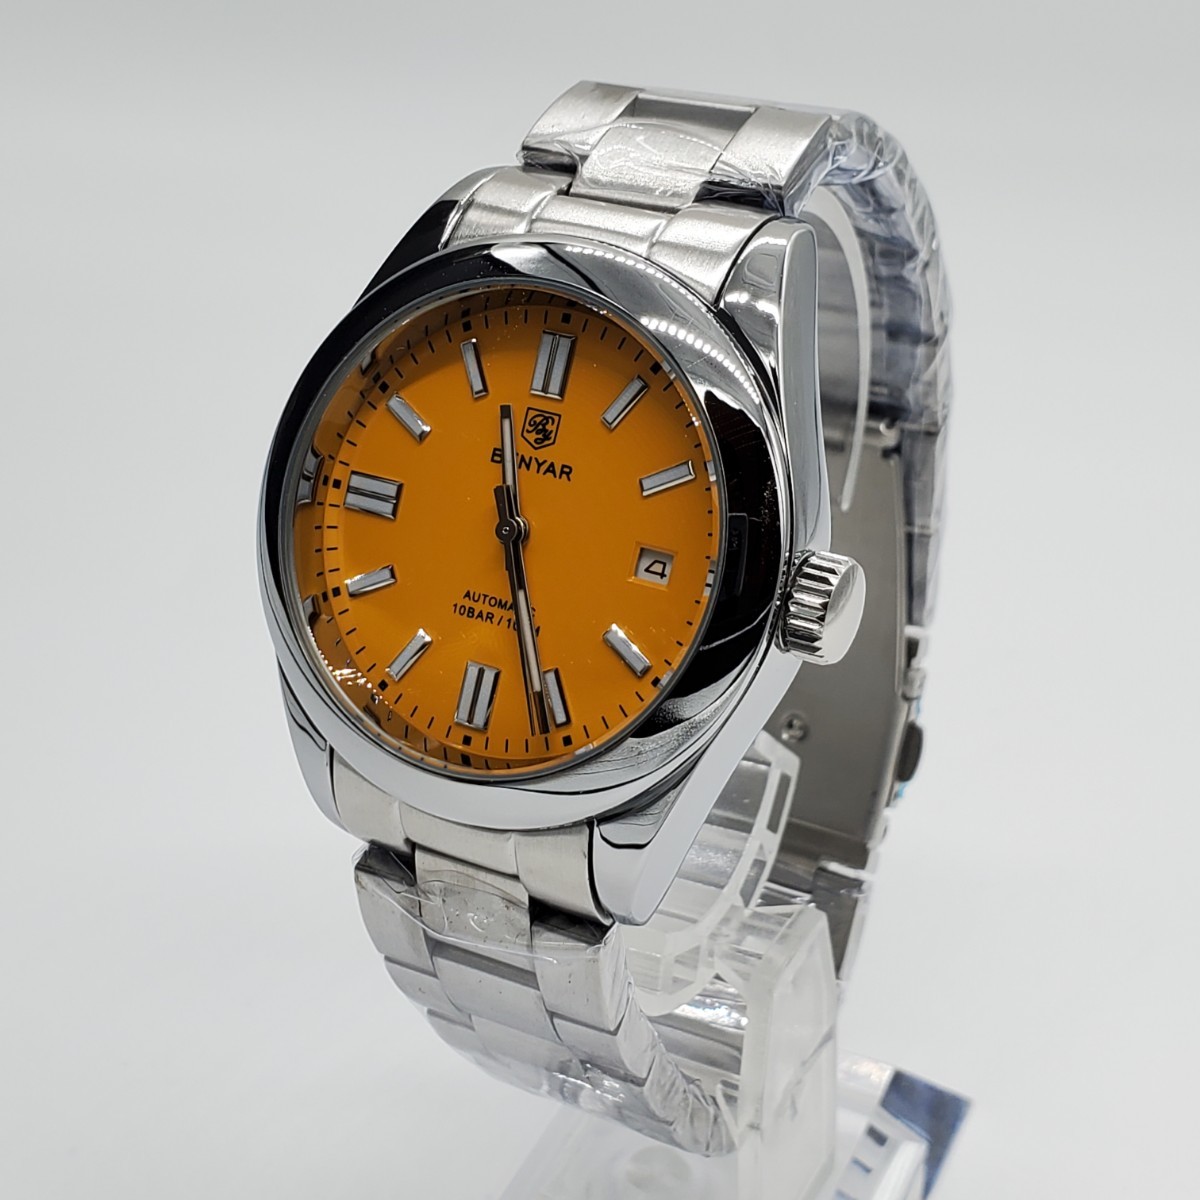  new goods self-winding watch BENYAR yellow yellow men's wristwatch machine ST6 business 